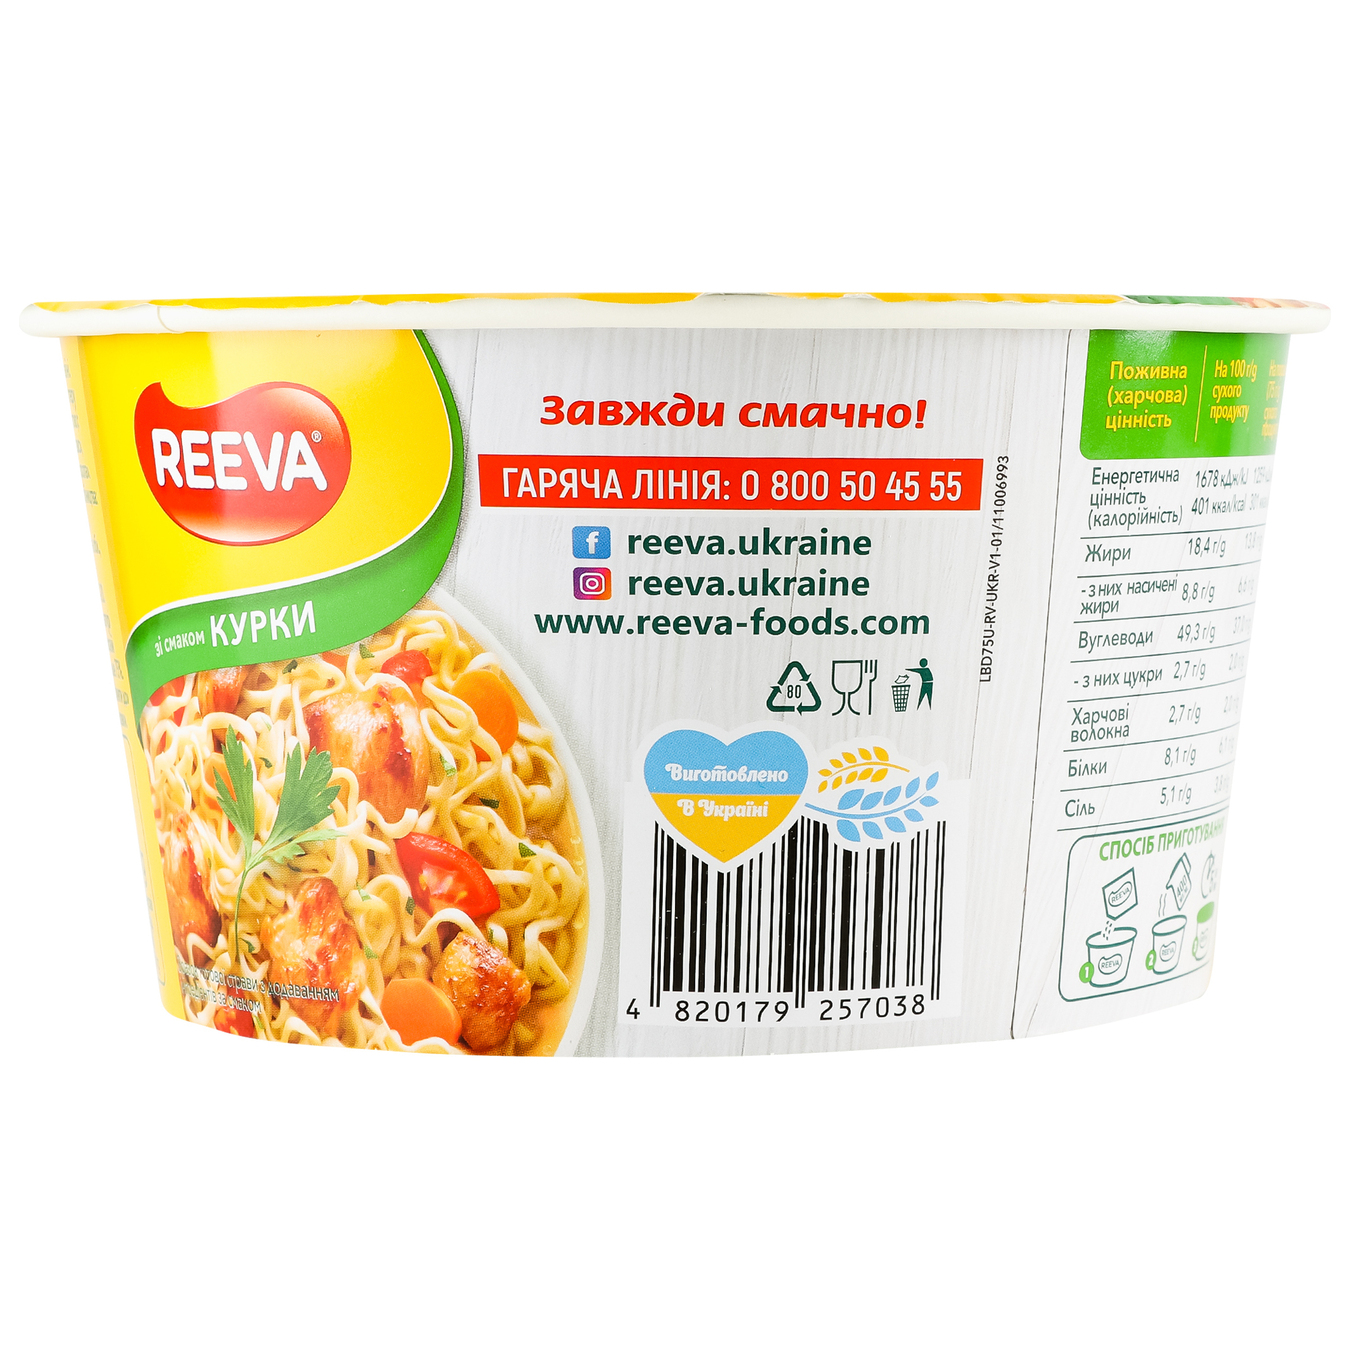 Instant noodles Reeva with chicken flavor 75g 2